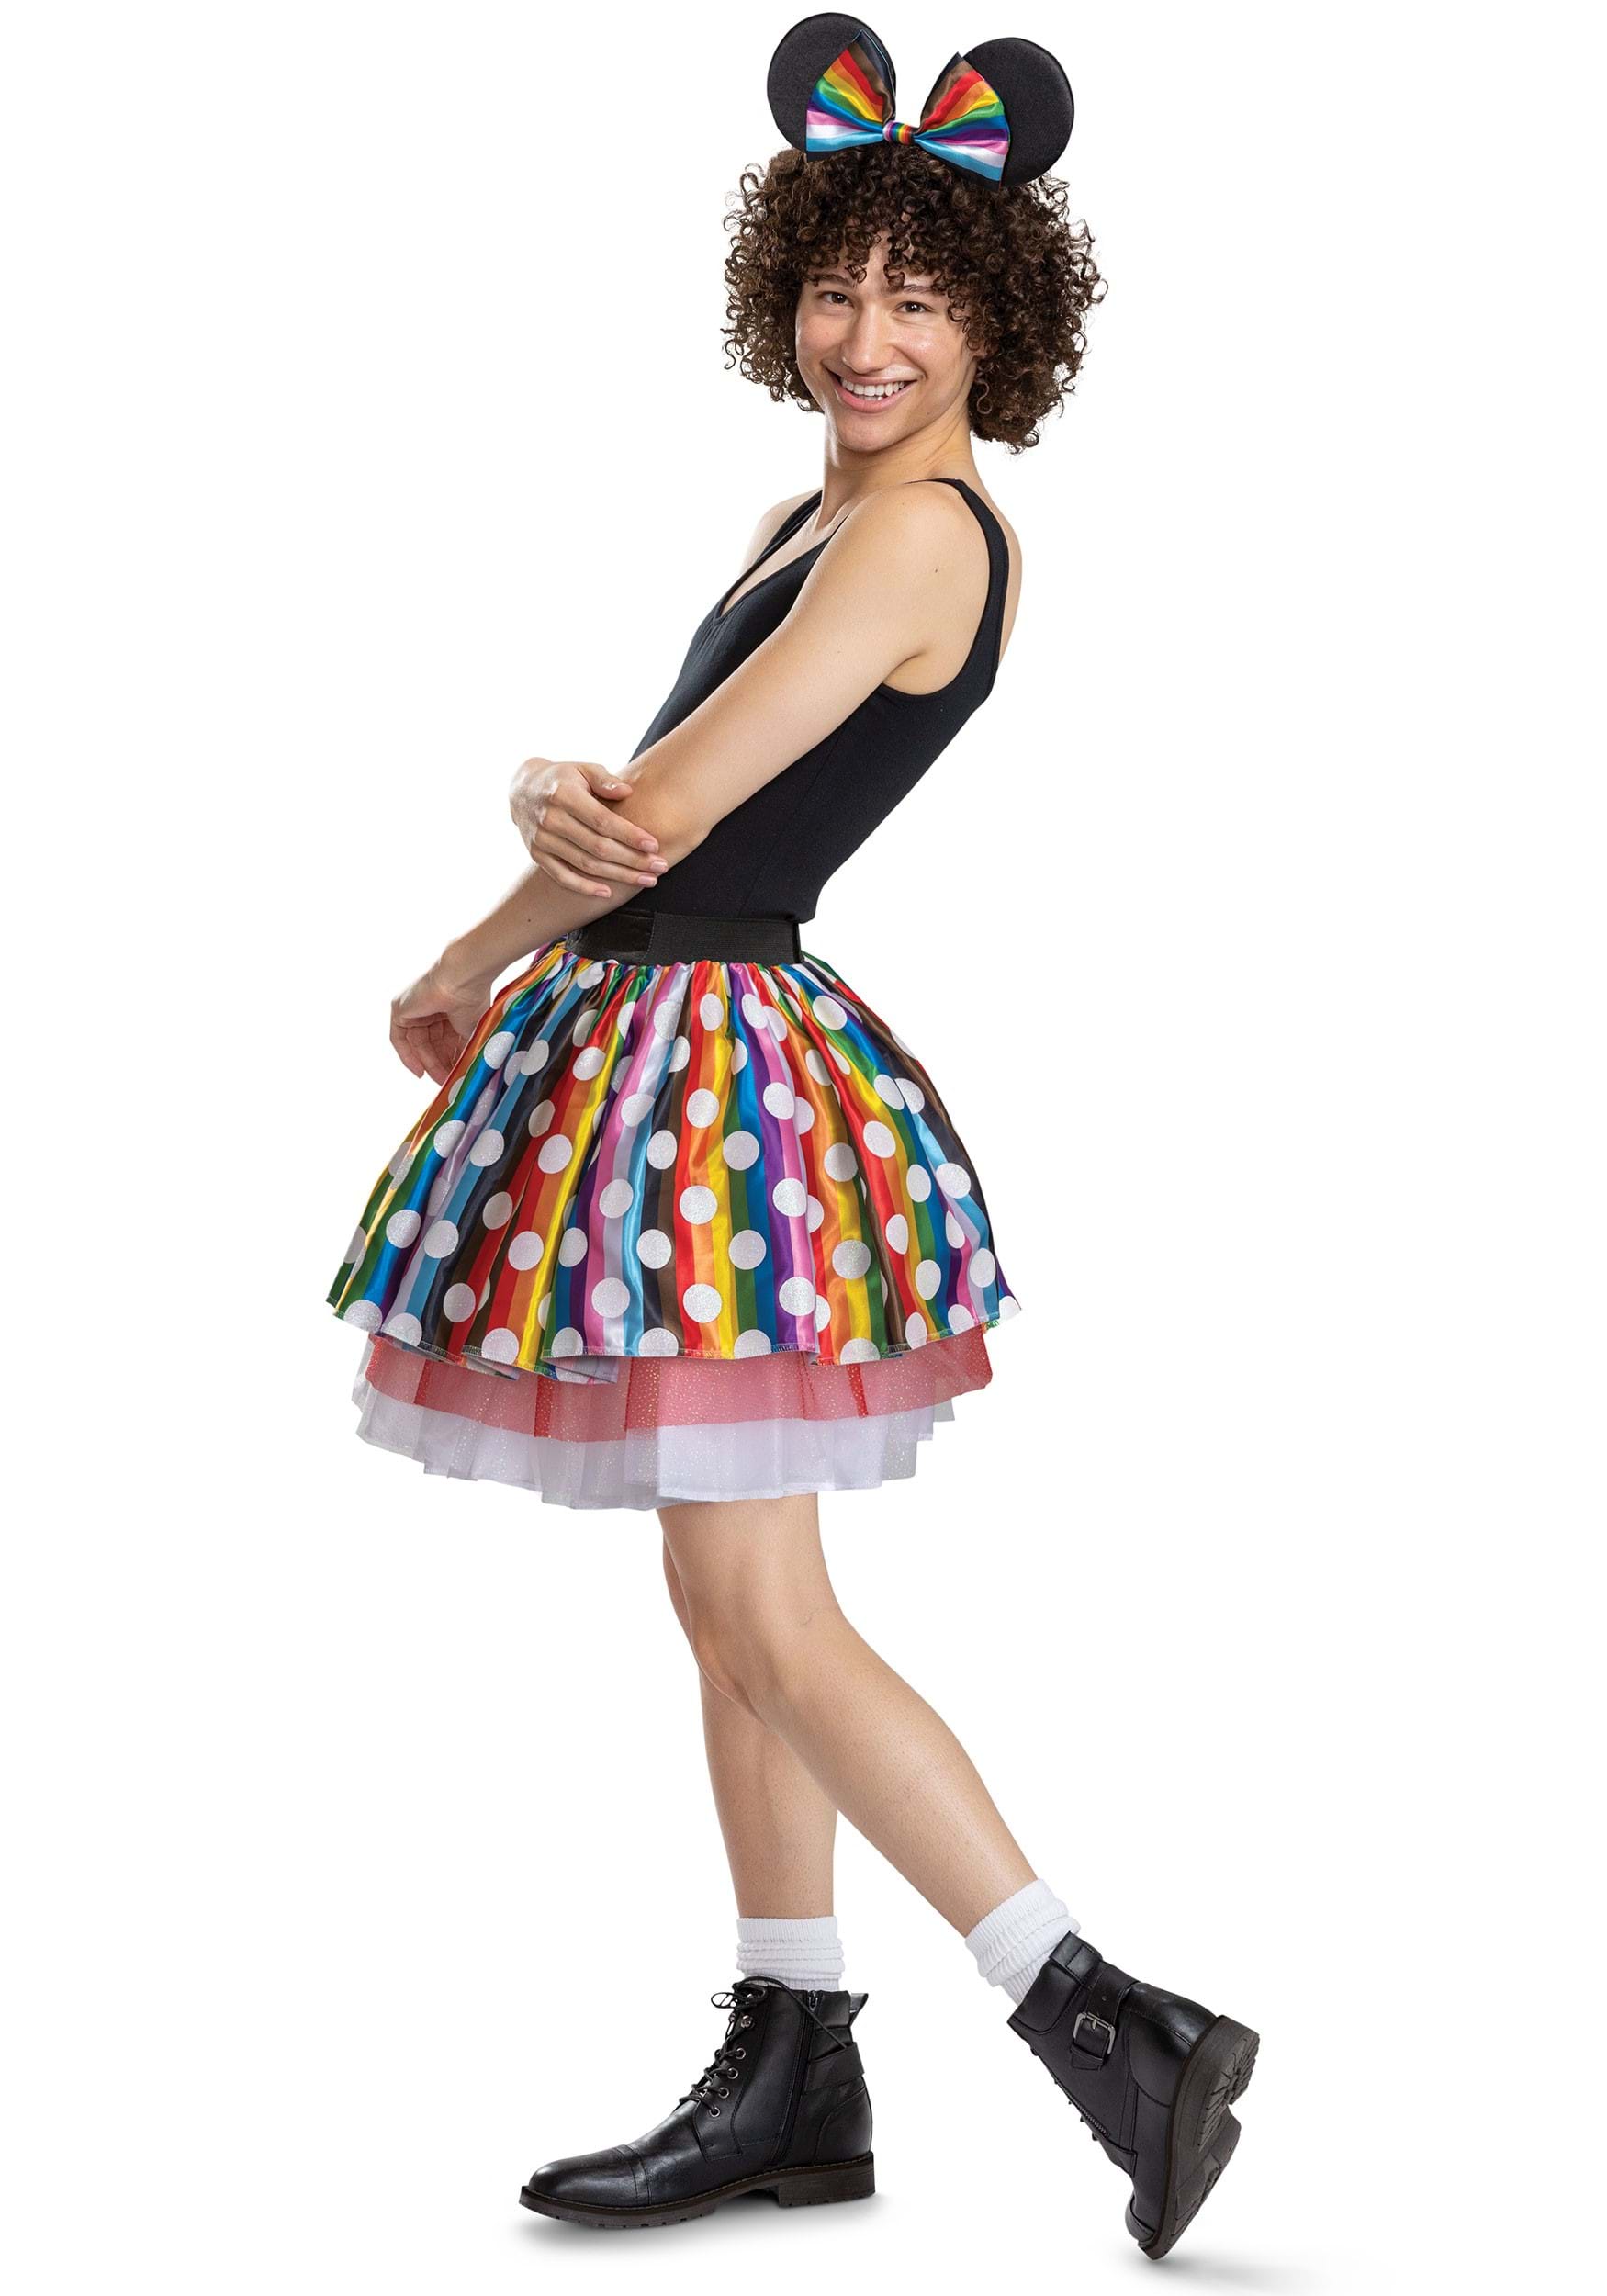 Disney Pride Minnie Mouse Fancy Dress Costume Dress For Women